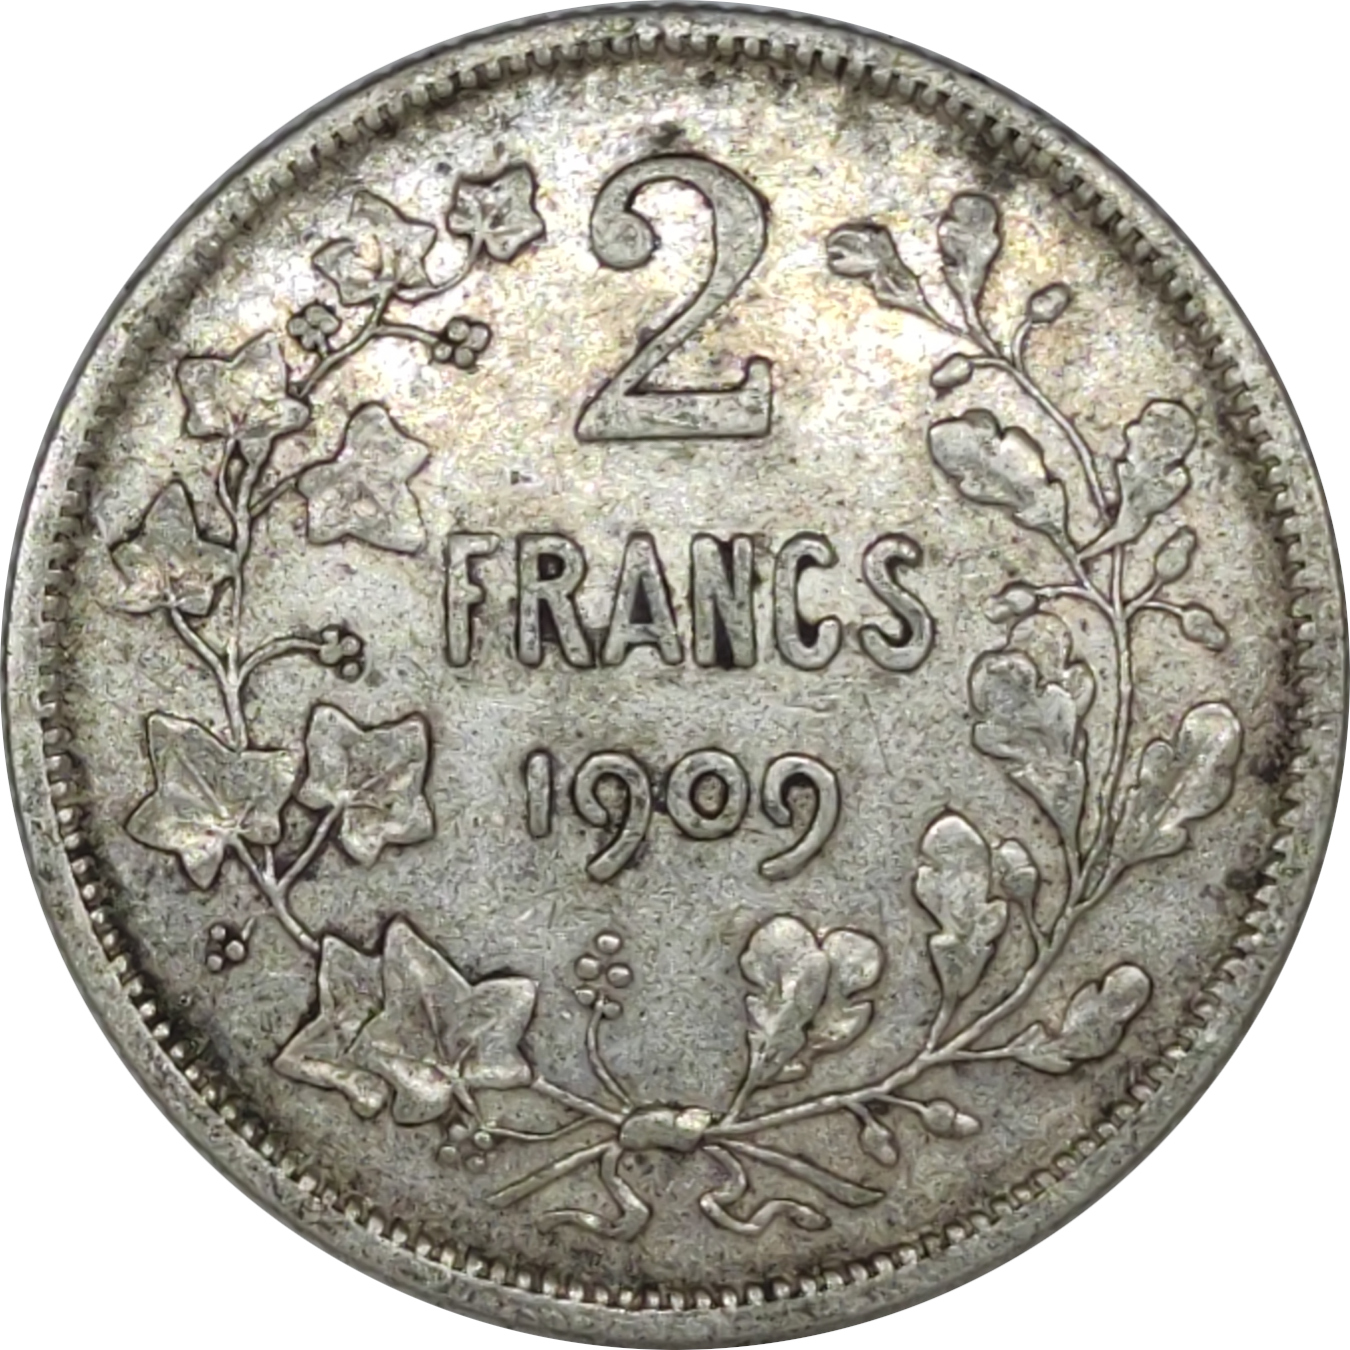 2 francs - Leopold II - Old head